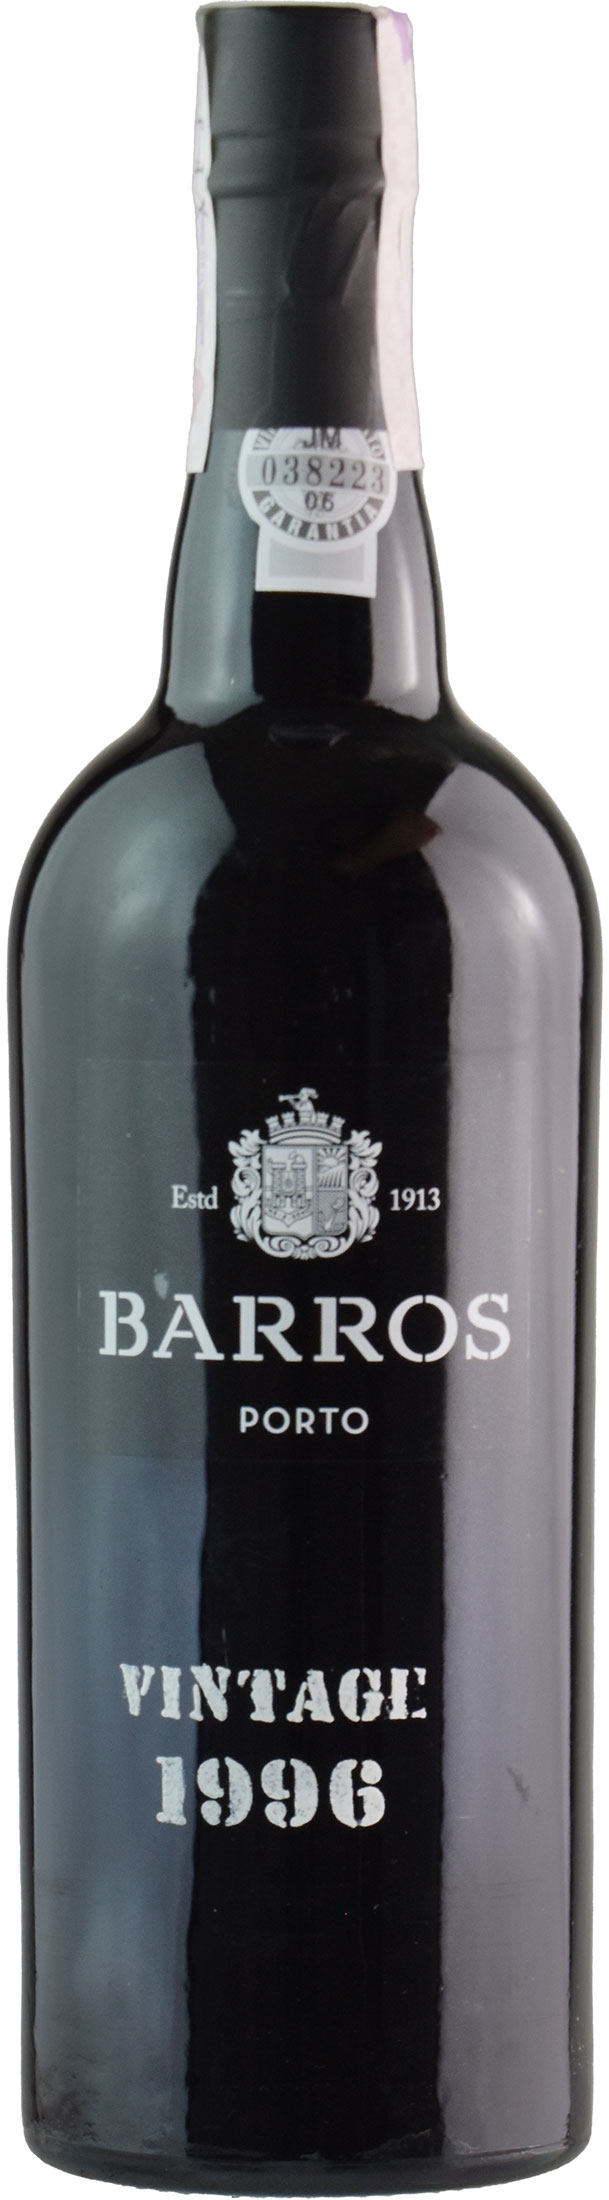 Barros Porto Vintage 1996